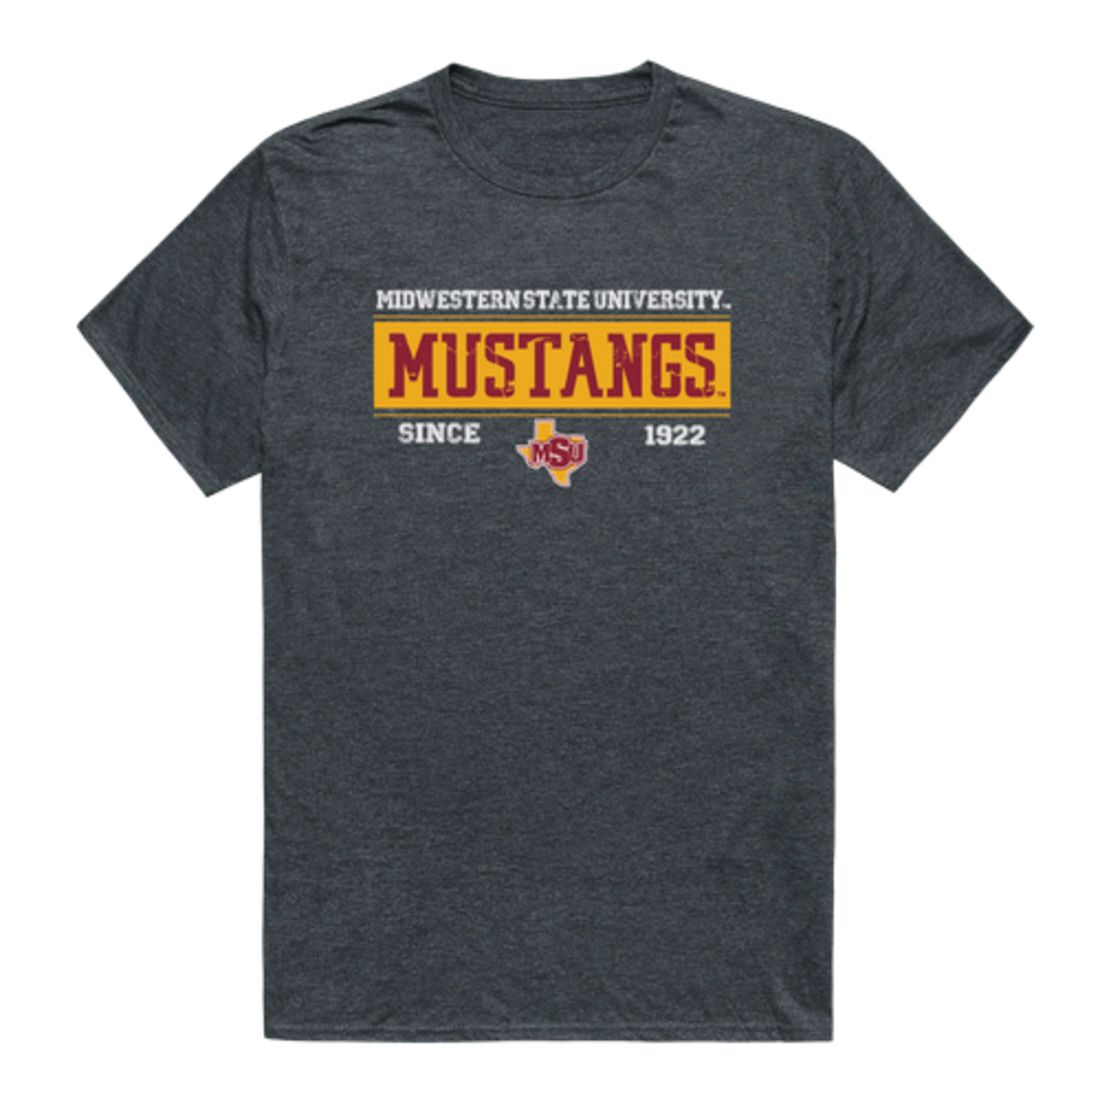 Midwestern State University Mustangs Established T-Shirt Tee